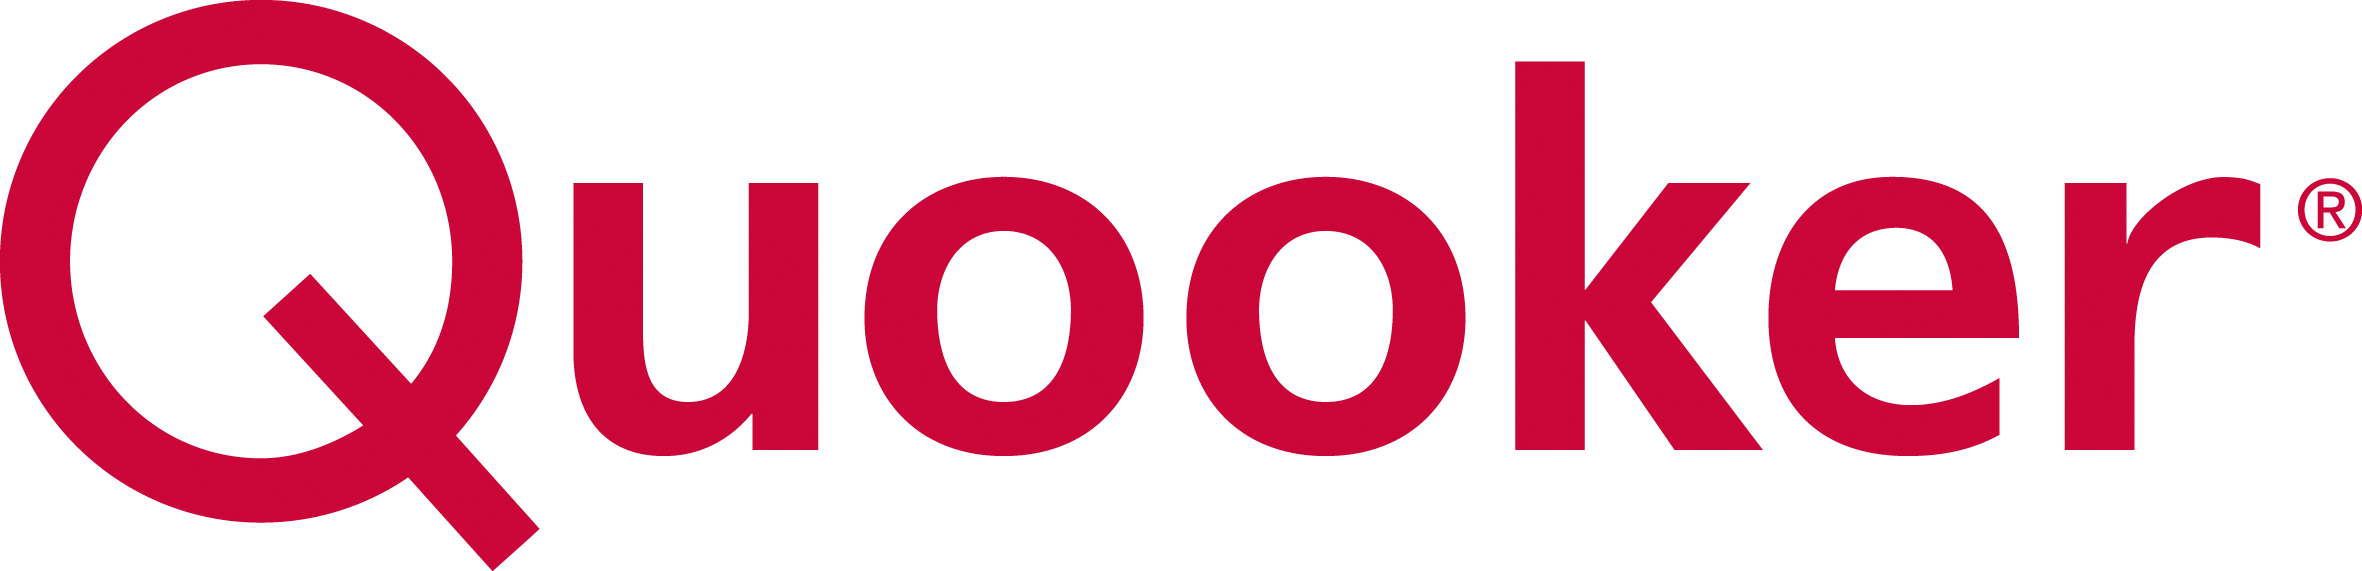 Quooker logo CMYK 0,100,65,15